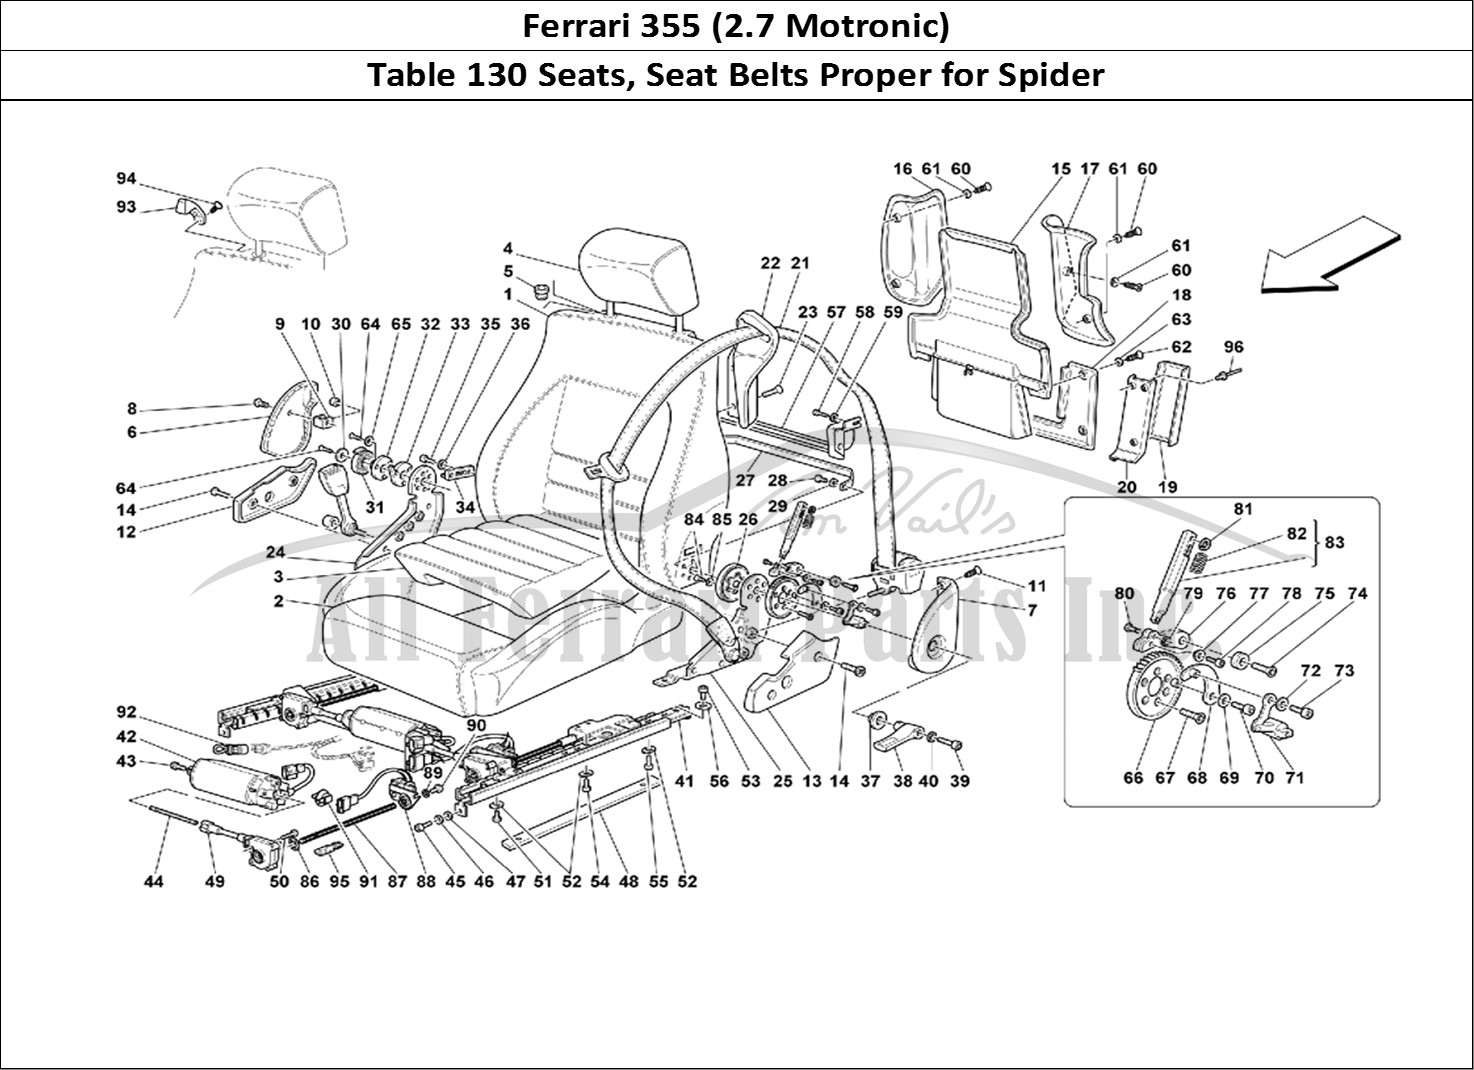 Ferrari Parts Ferrari 355 (2.7 Motronic) Page 130 Seats and Safety Belts -V